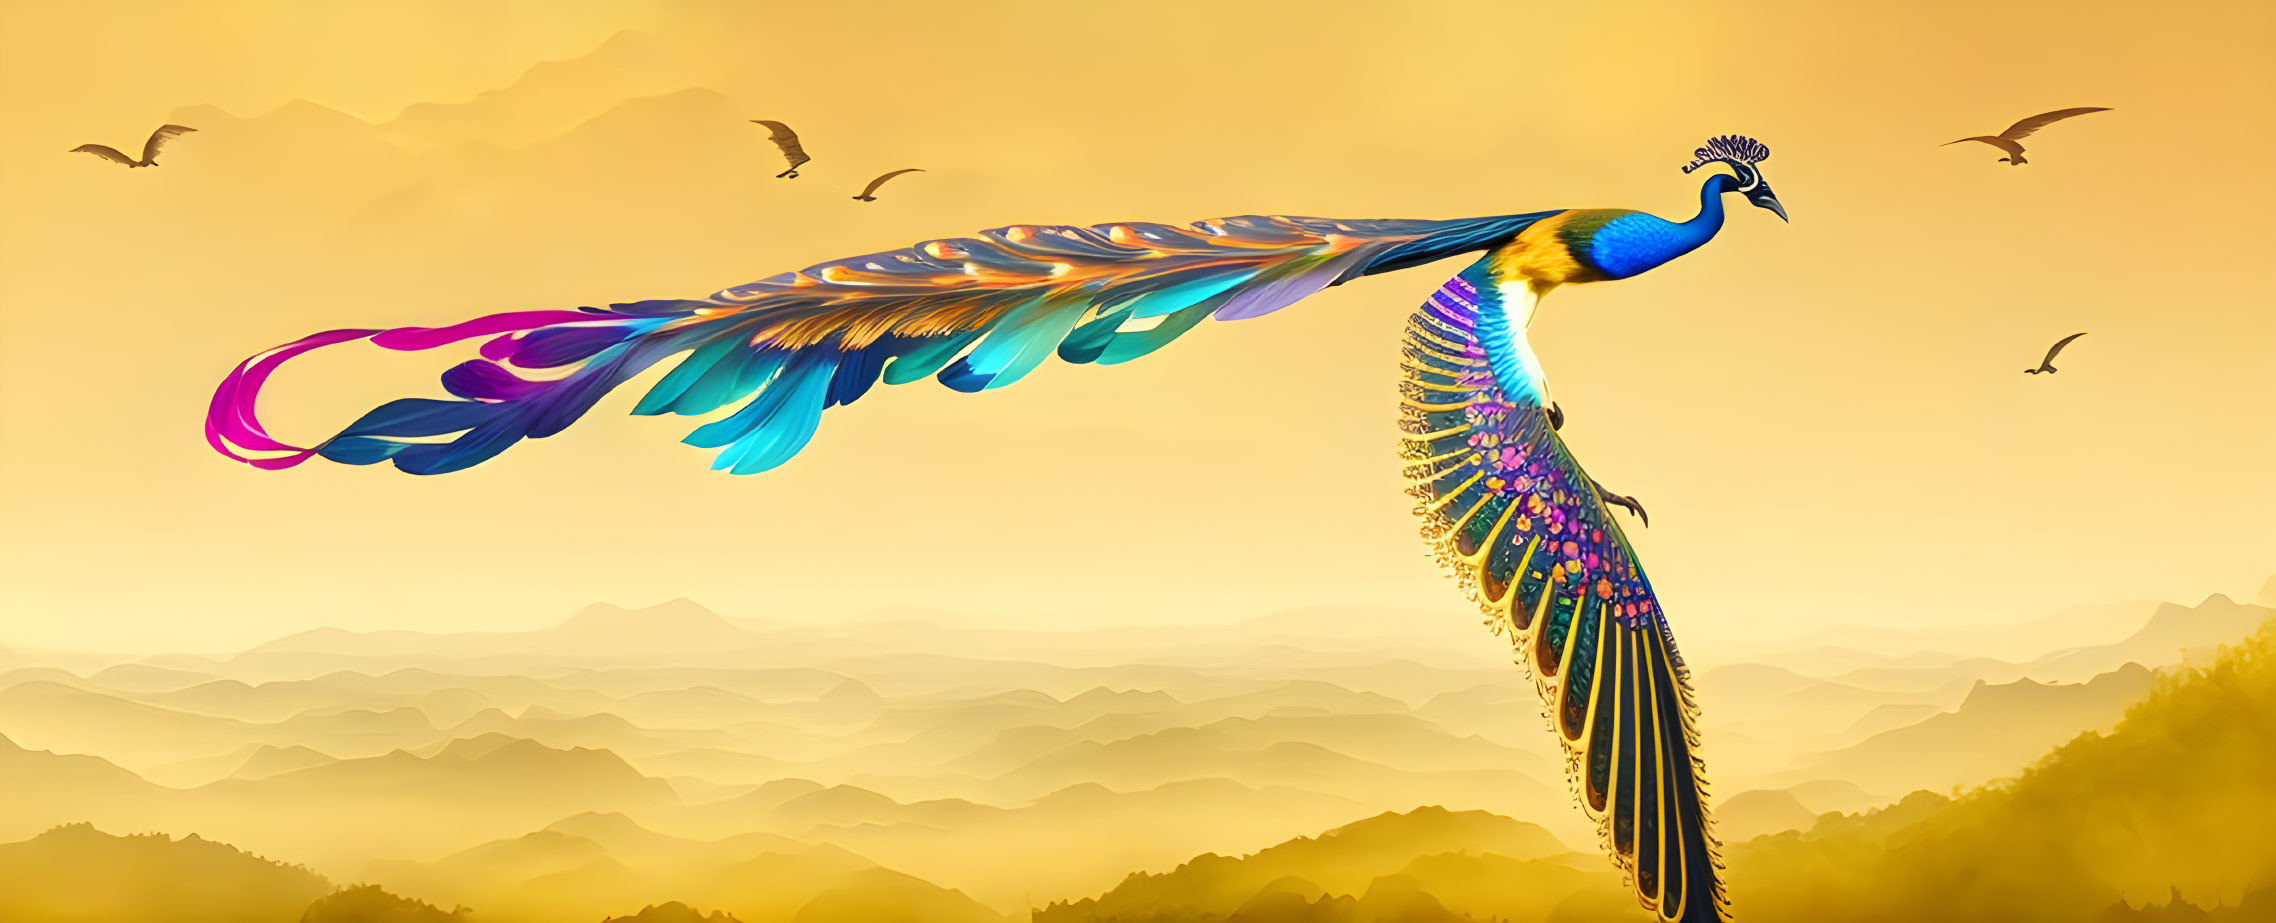 Colorful Peacock Digital Art Against Mountainous Backdrop